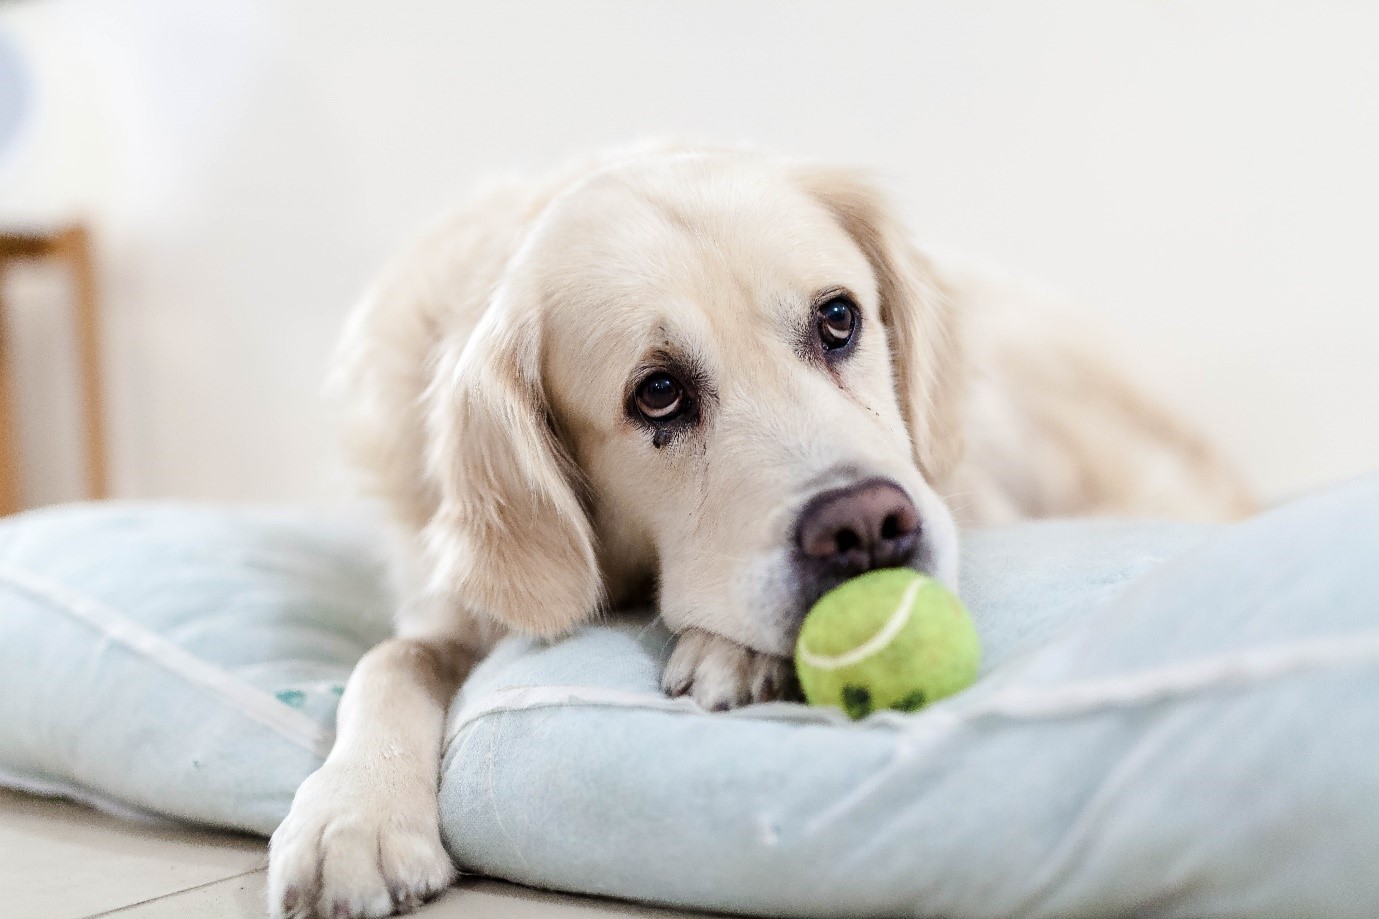 Sweet dog holding tennis ball 